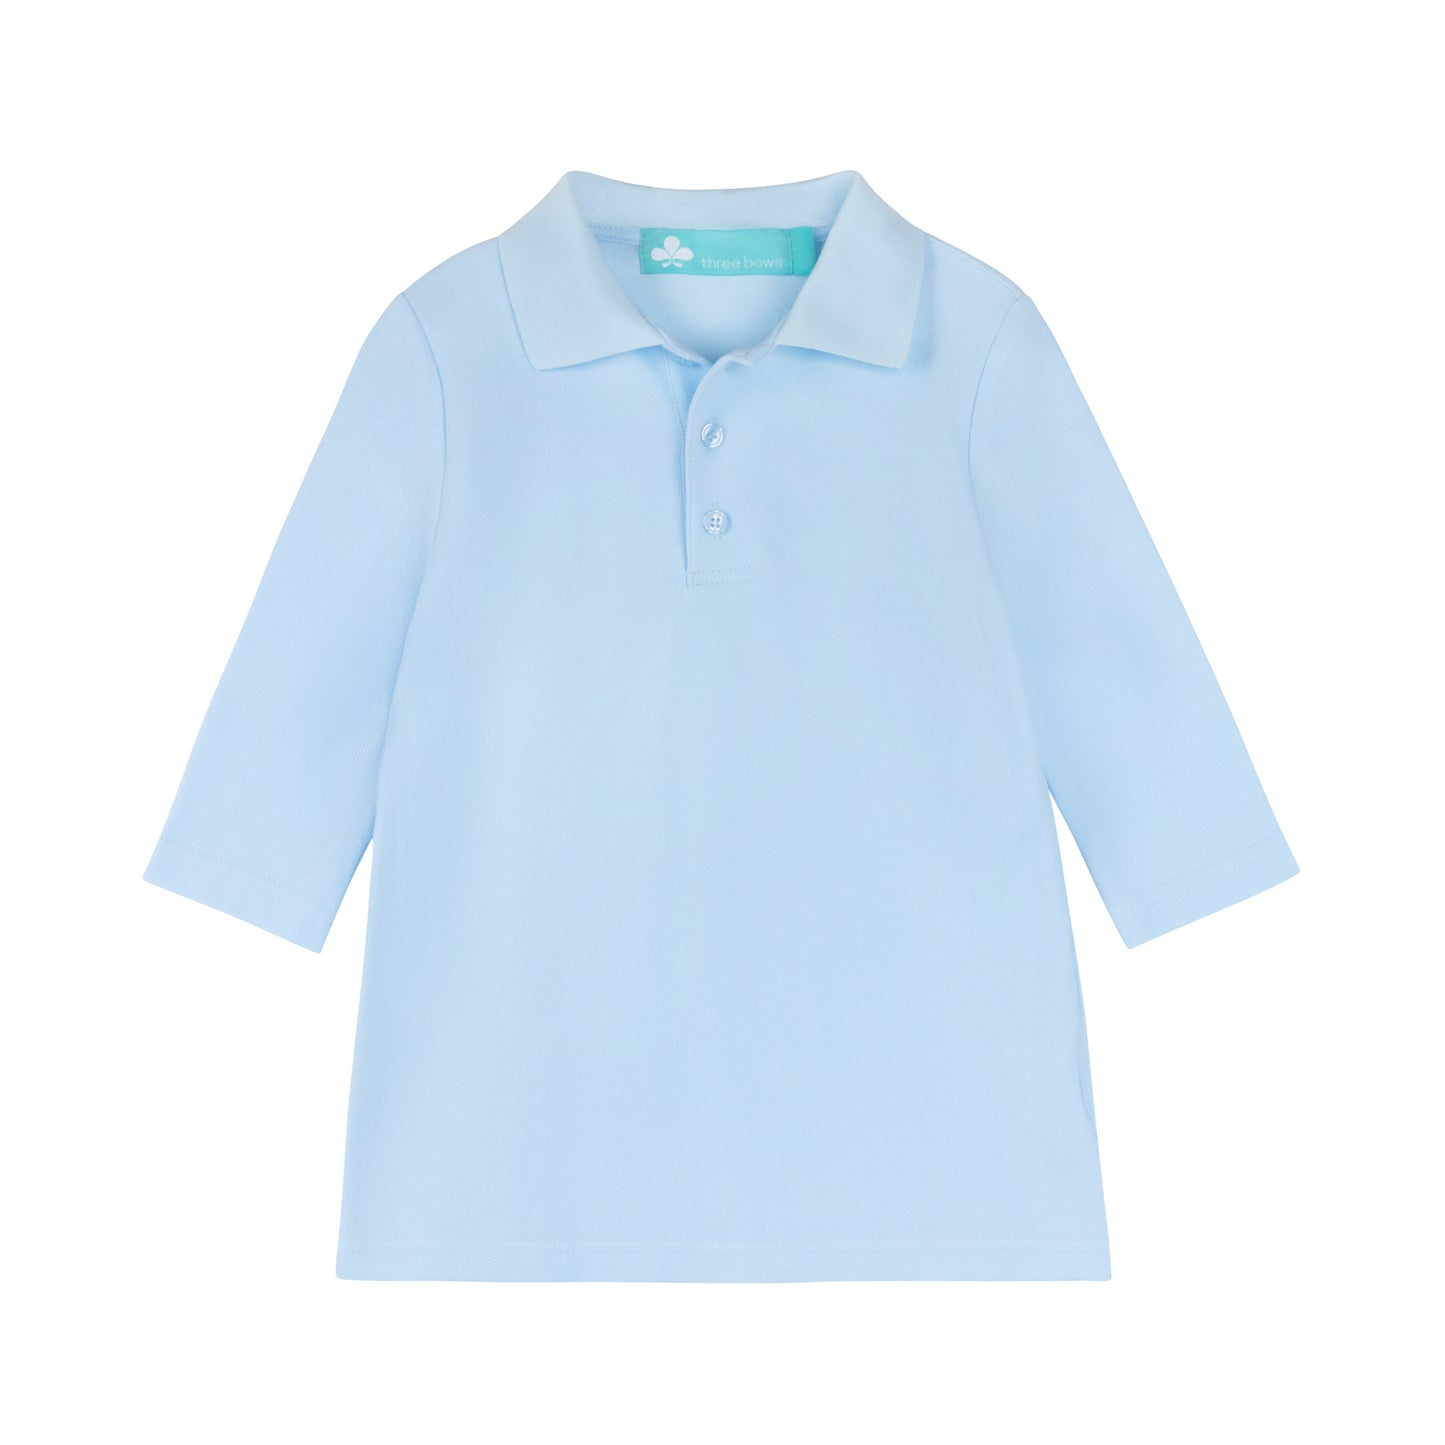 Girls Polo T-shirt 3/4 Sleeve- Pale Blue